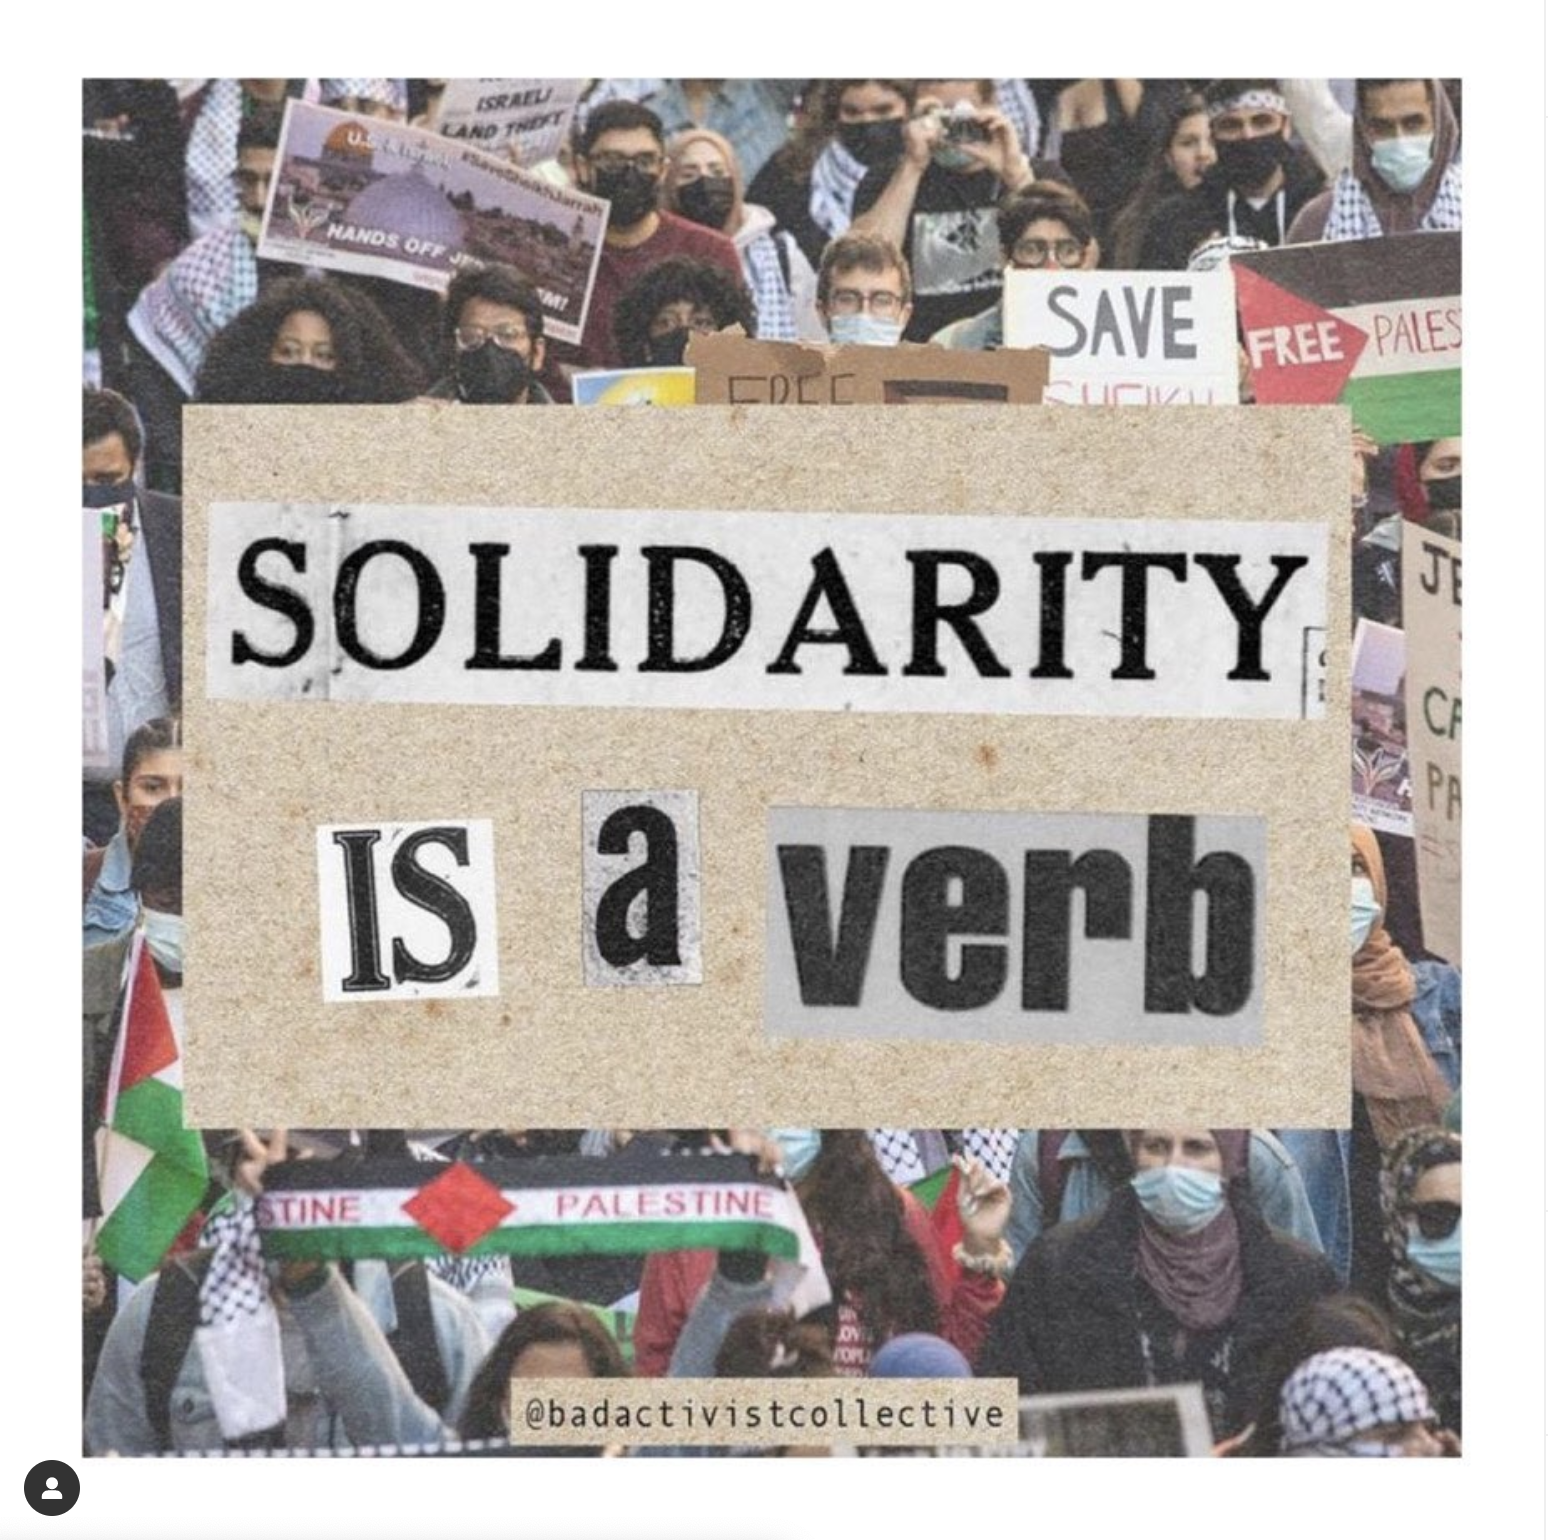 Emma Watson Pro-Palestine post on Instagram